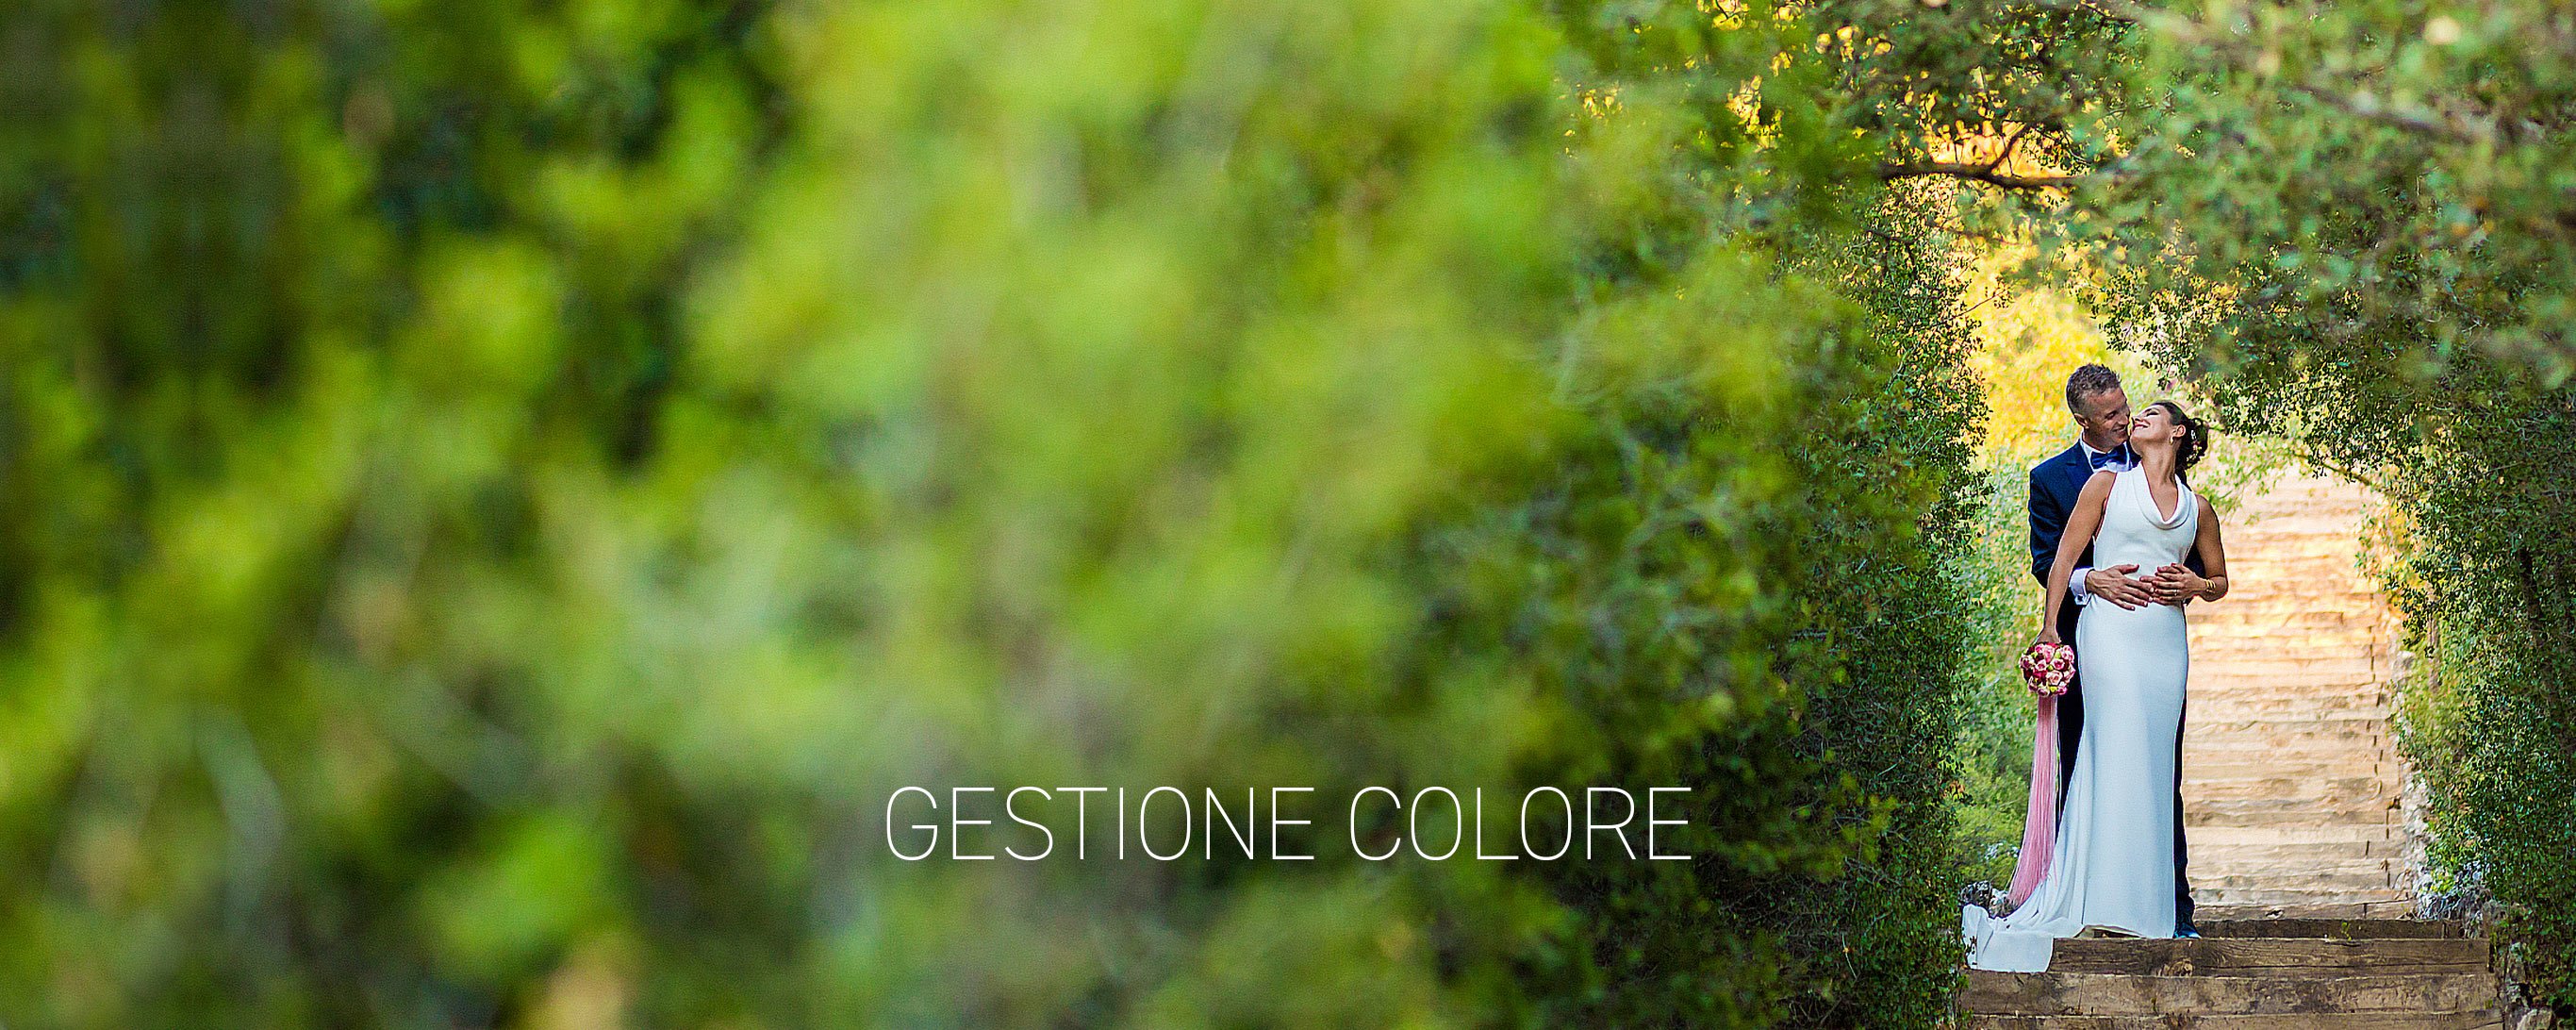 AE_Gestione-Colore_L_ITA_ok